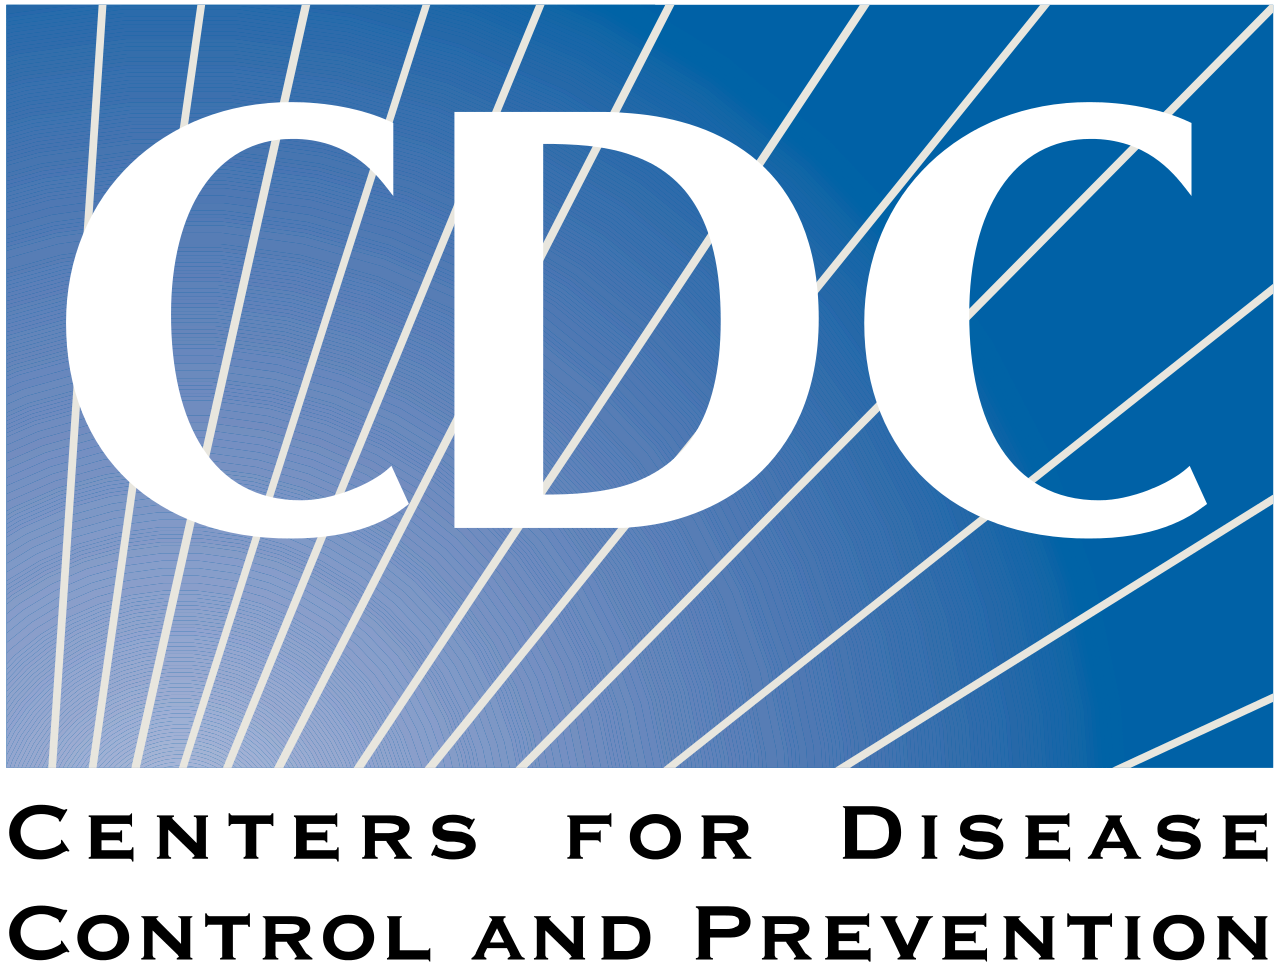 CDC Government Digital Communications ALI Conferences